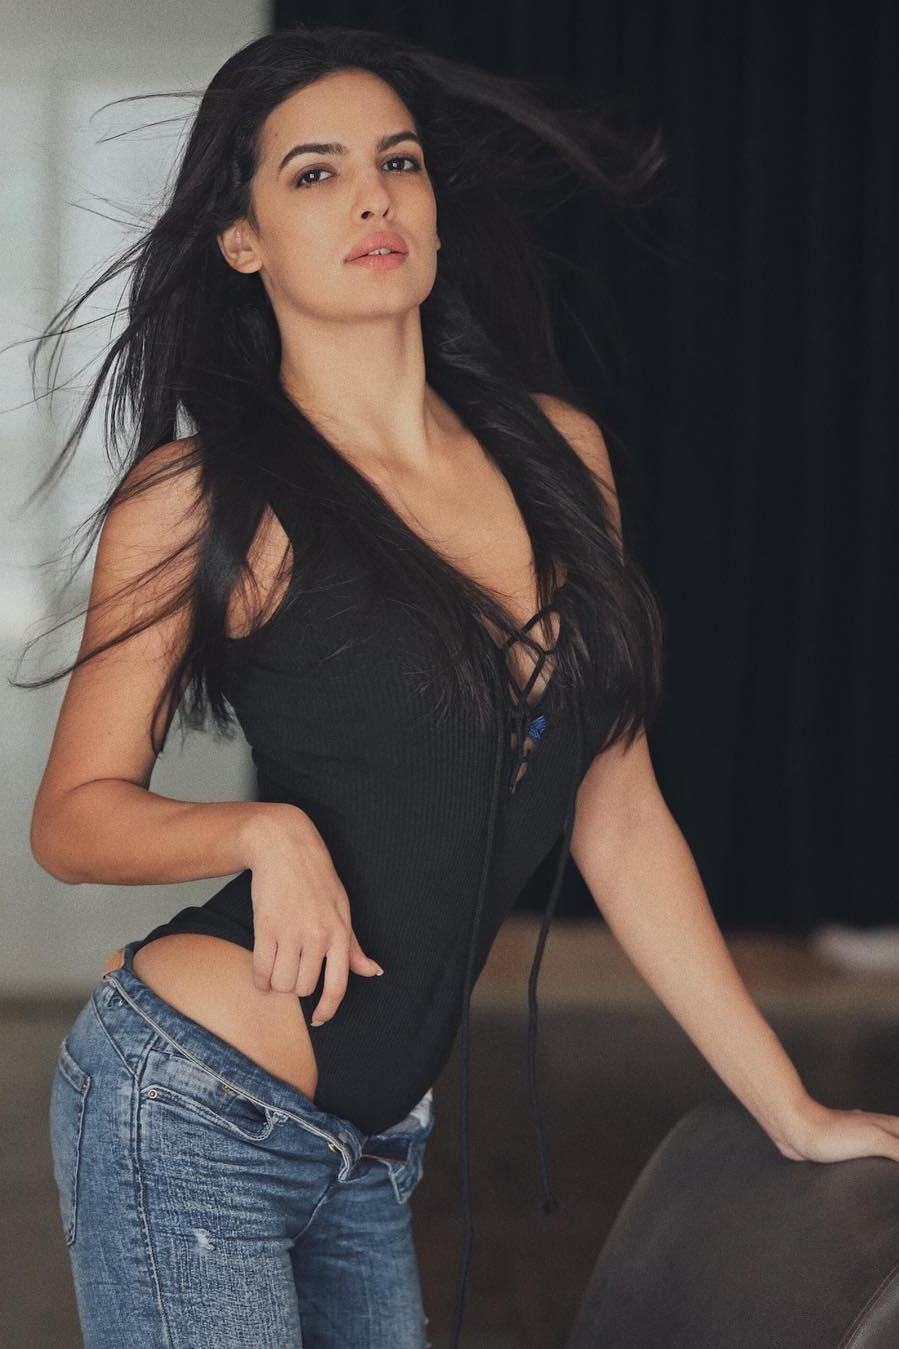 NatasaStankovic, Model, Bollywood, Actress